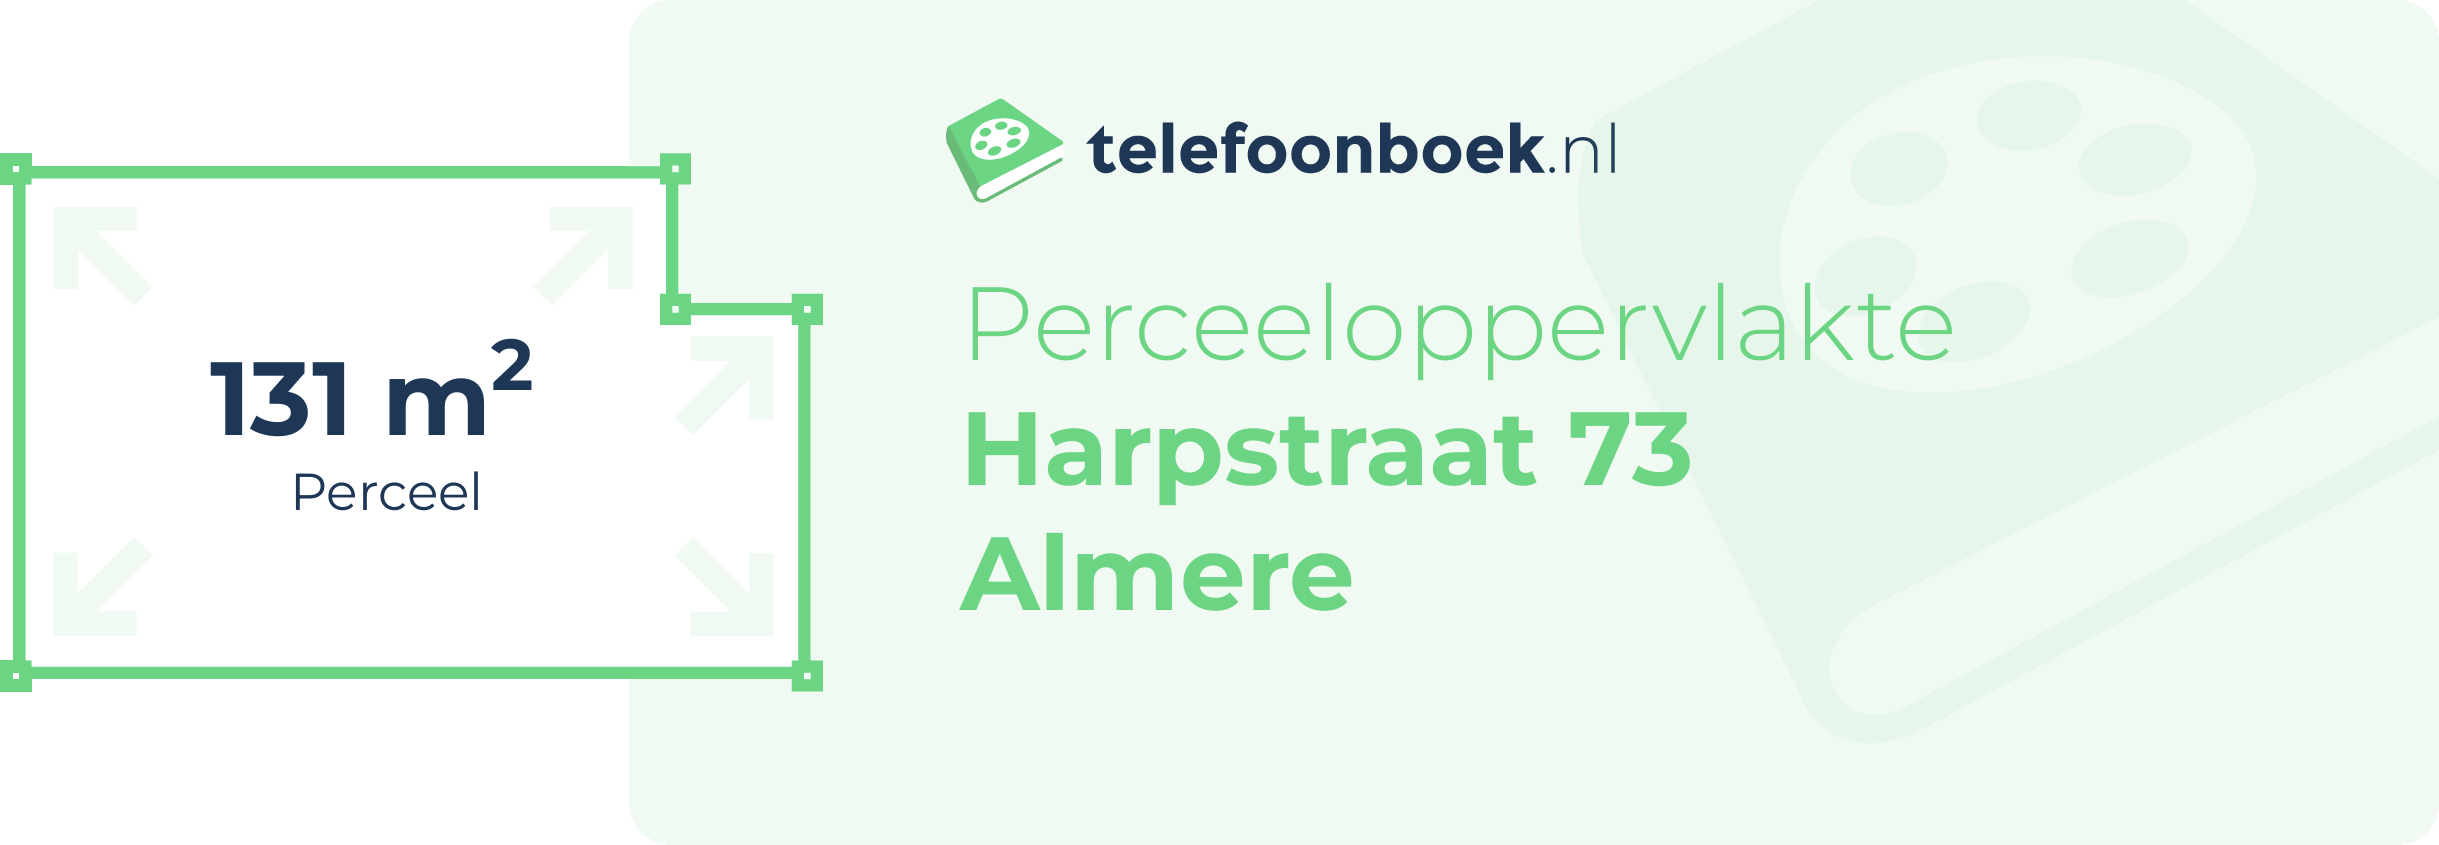 Perceeloppervlakte Harpstraat 73 Almere